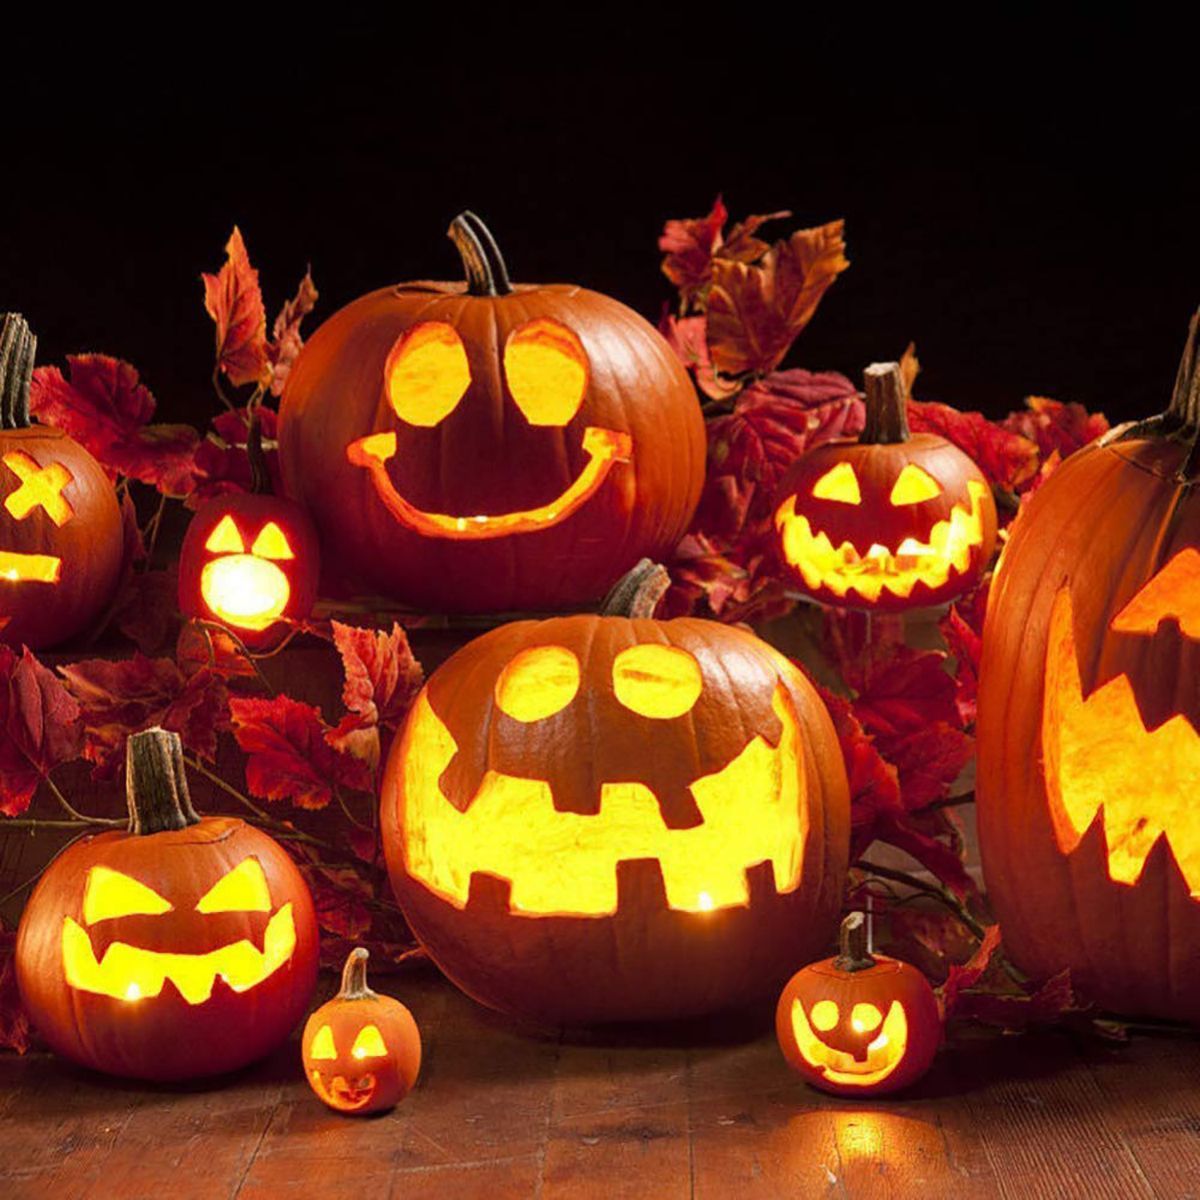 13PcsSet-Stainless-Steel-Halloween-Pumpkin-Carving-Sculpt-Tools-Kit-Party-Decor-1554839